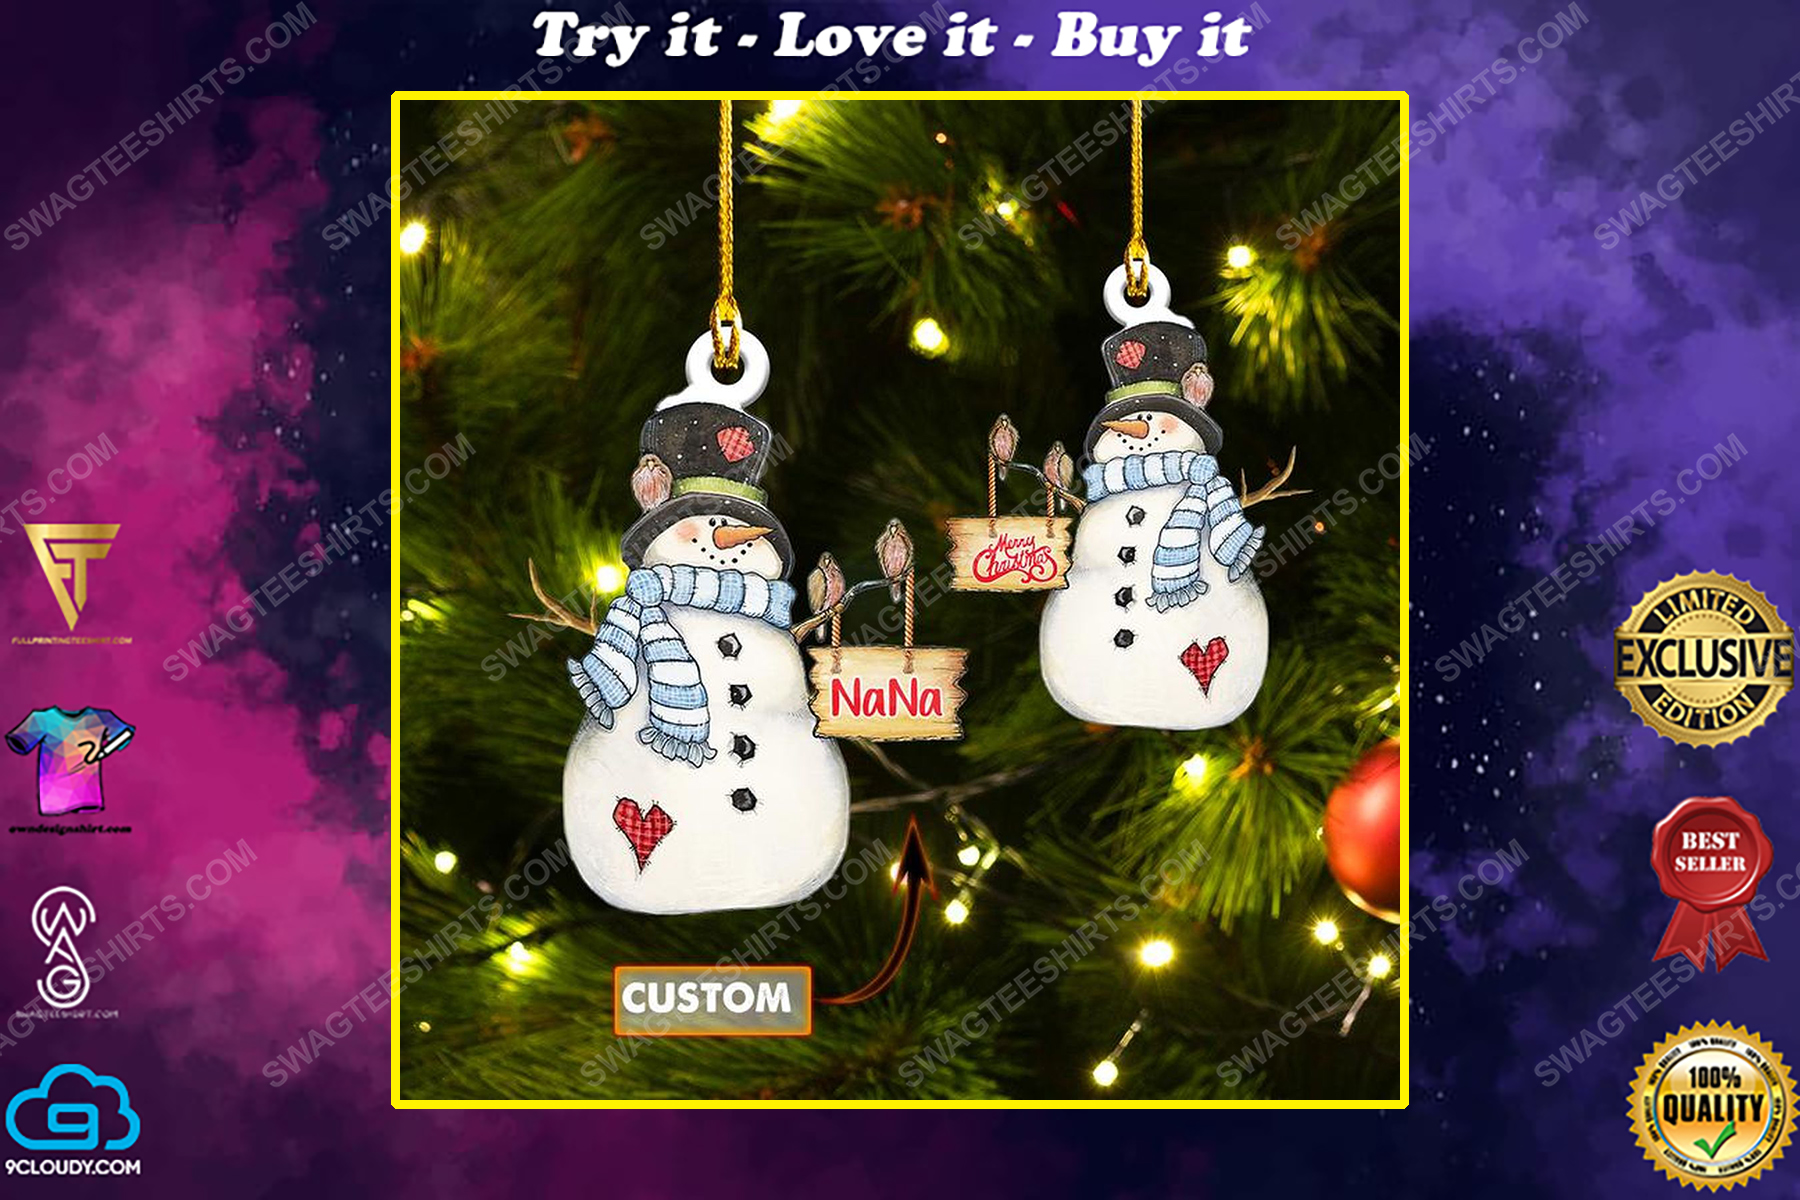 Custom snowman christmas gift ornament